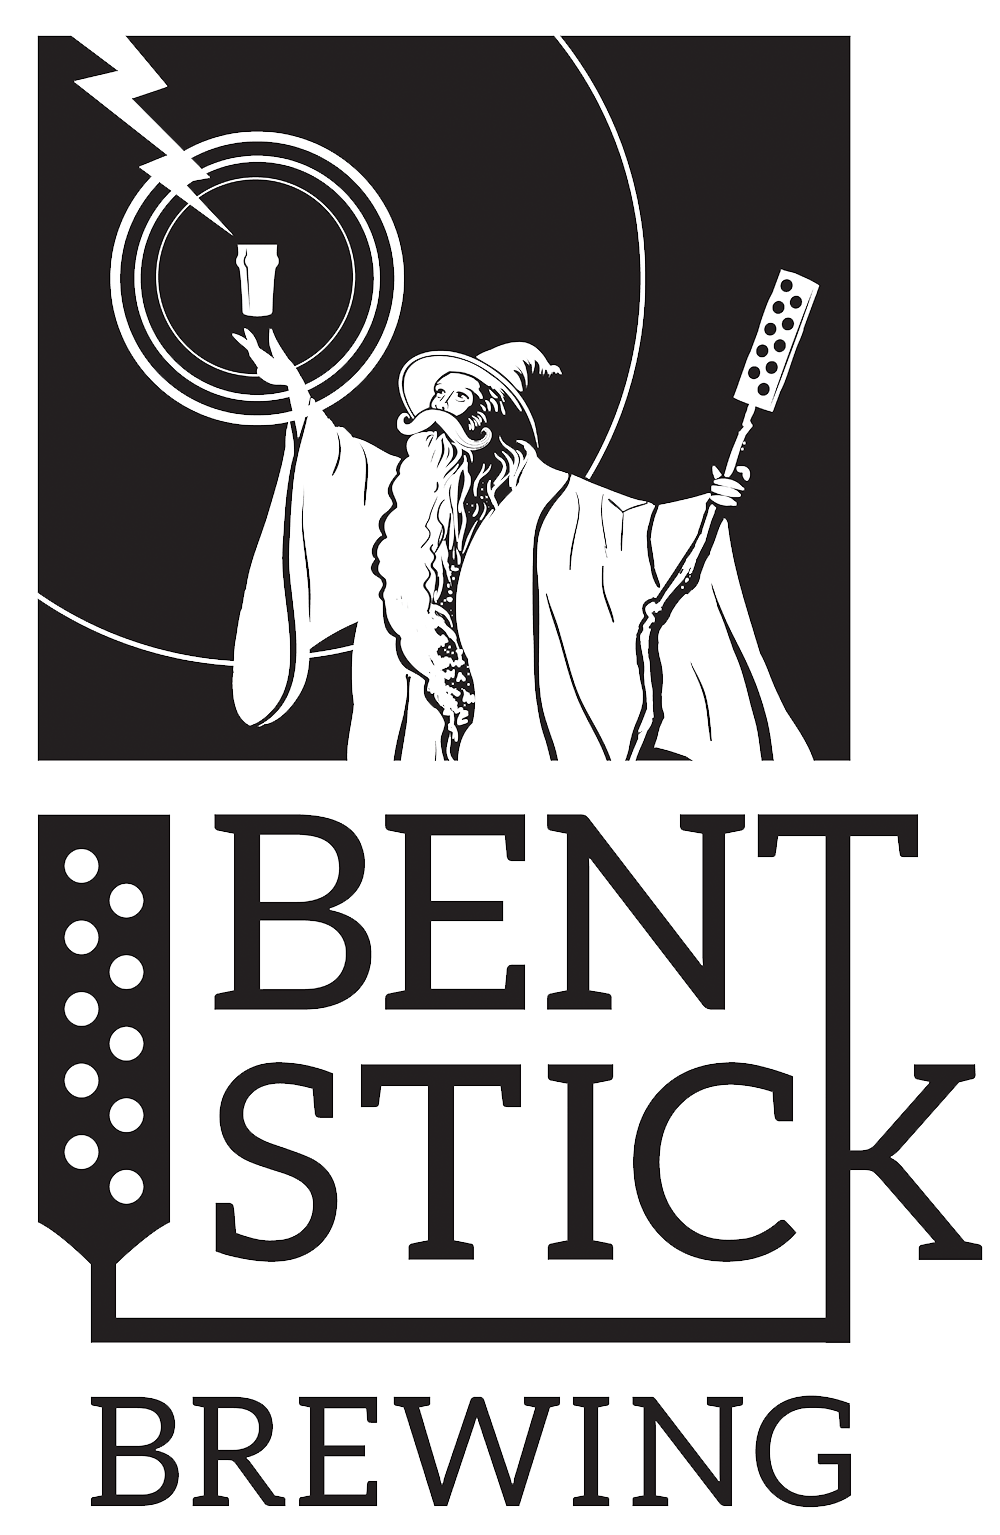 Bent Stick Brewing